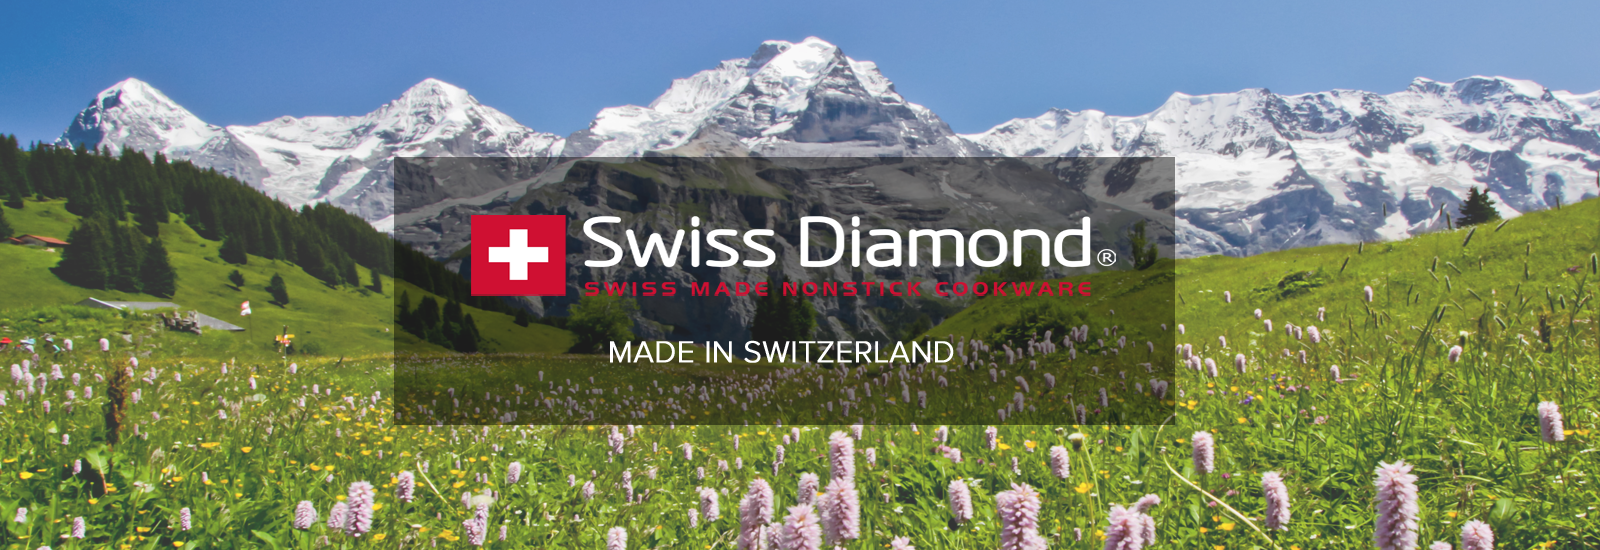 Swiss Diamond Cookware